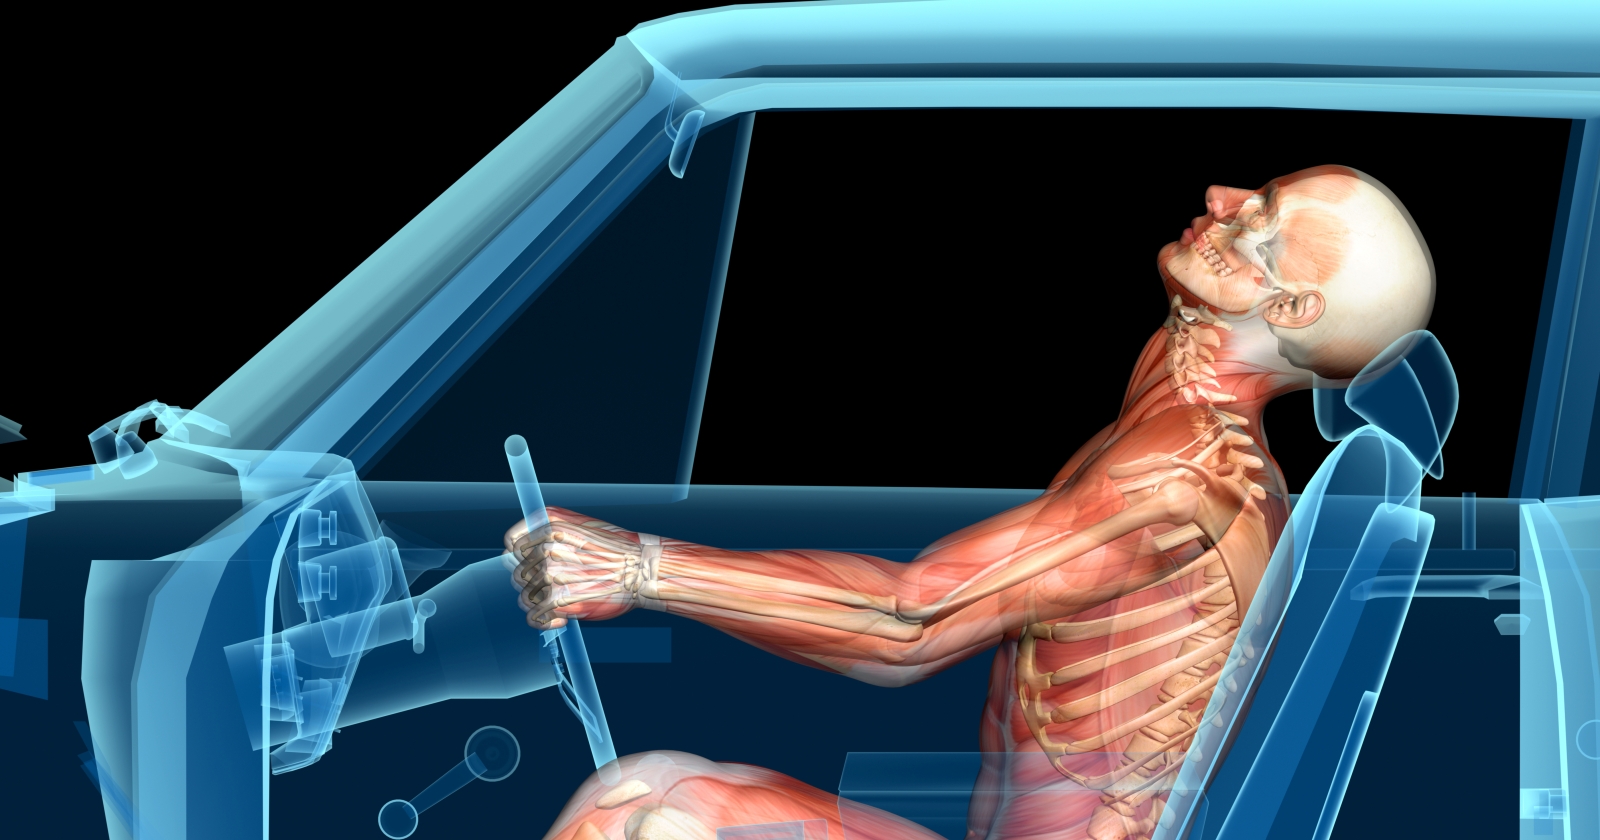 Muscular skeletal sketch of individual in car crash. Exponent biomechanical analysis of injury claims.